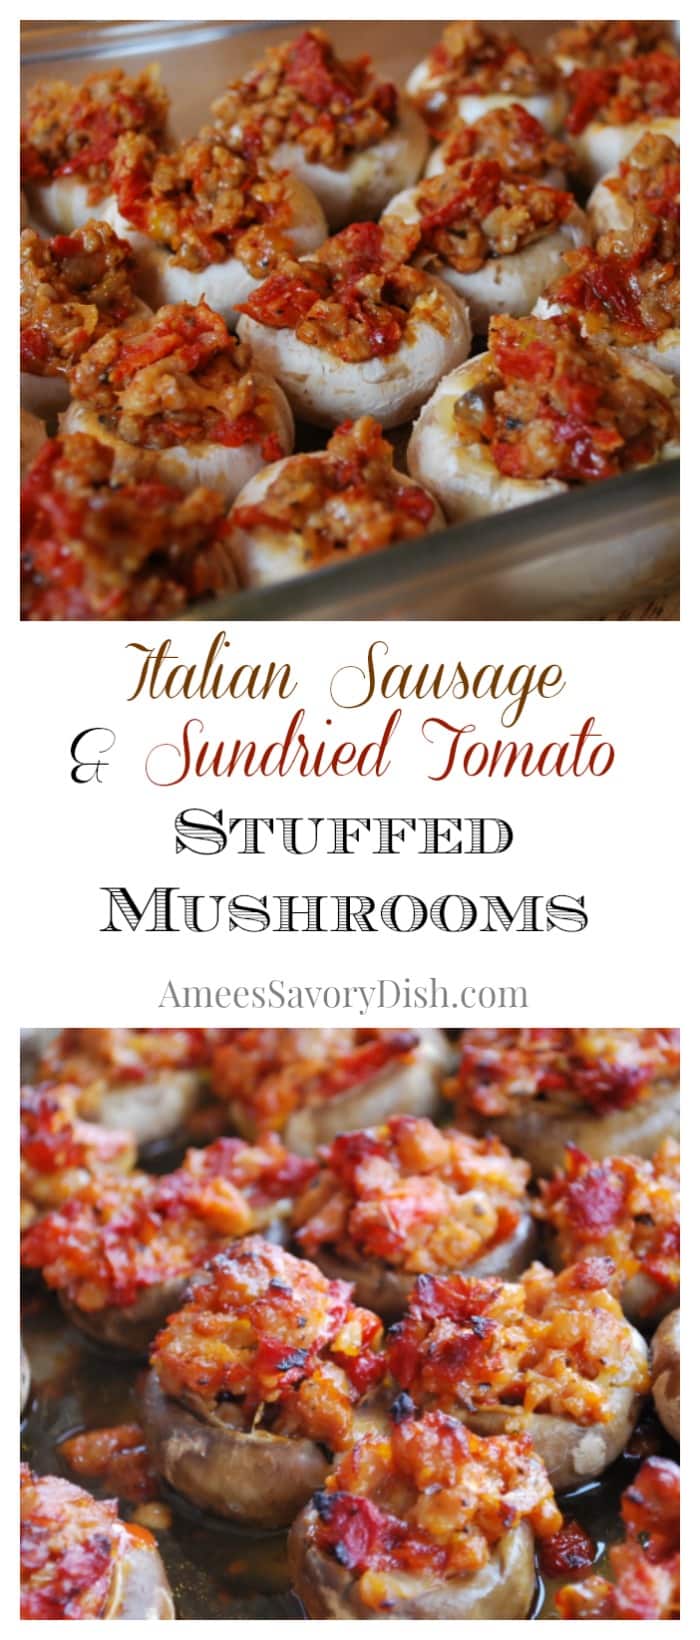 Italian Sausage and Sundried Tomato Stuffed Mushrooms